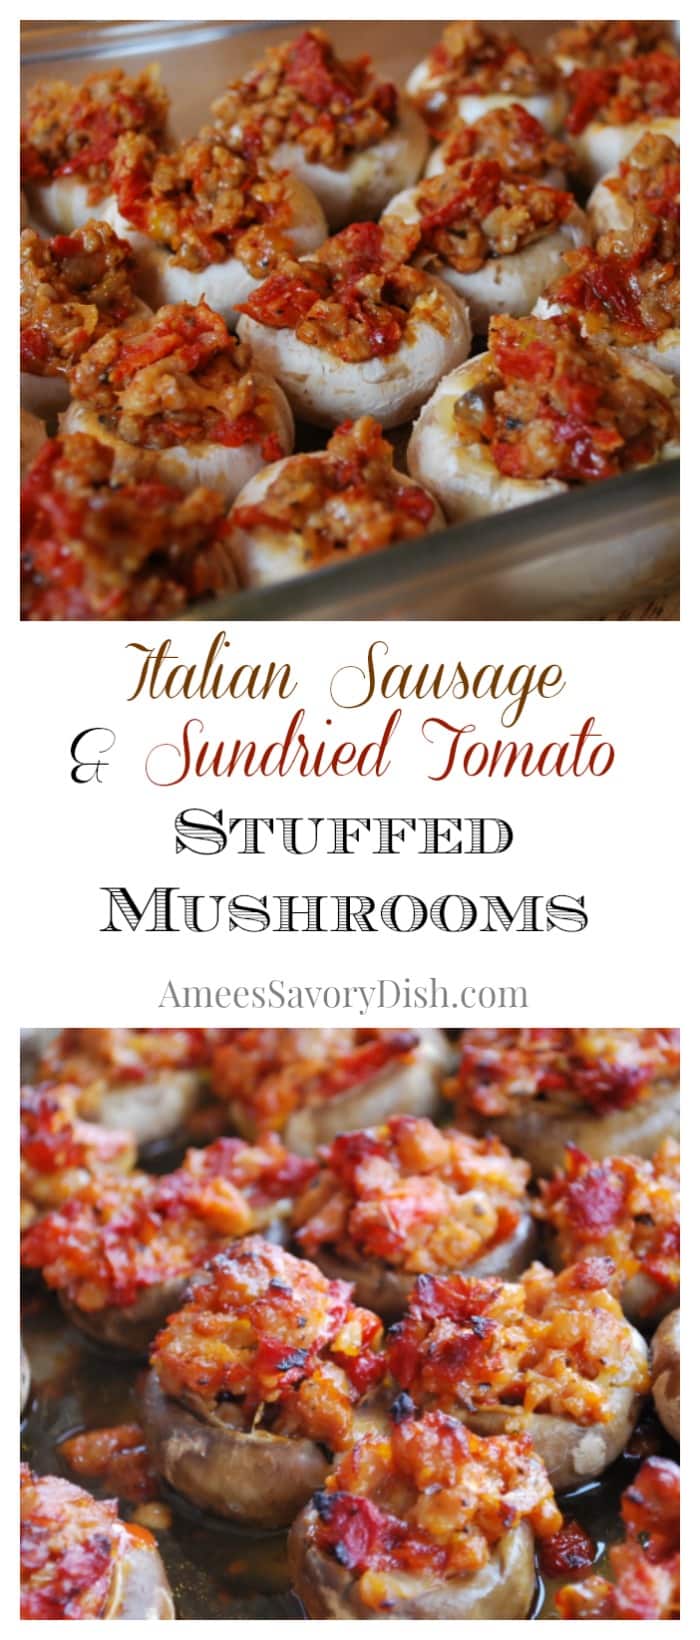 Italian Sausage and Sundried Tomato Stuffed Mushrooms